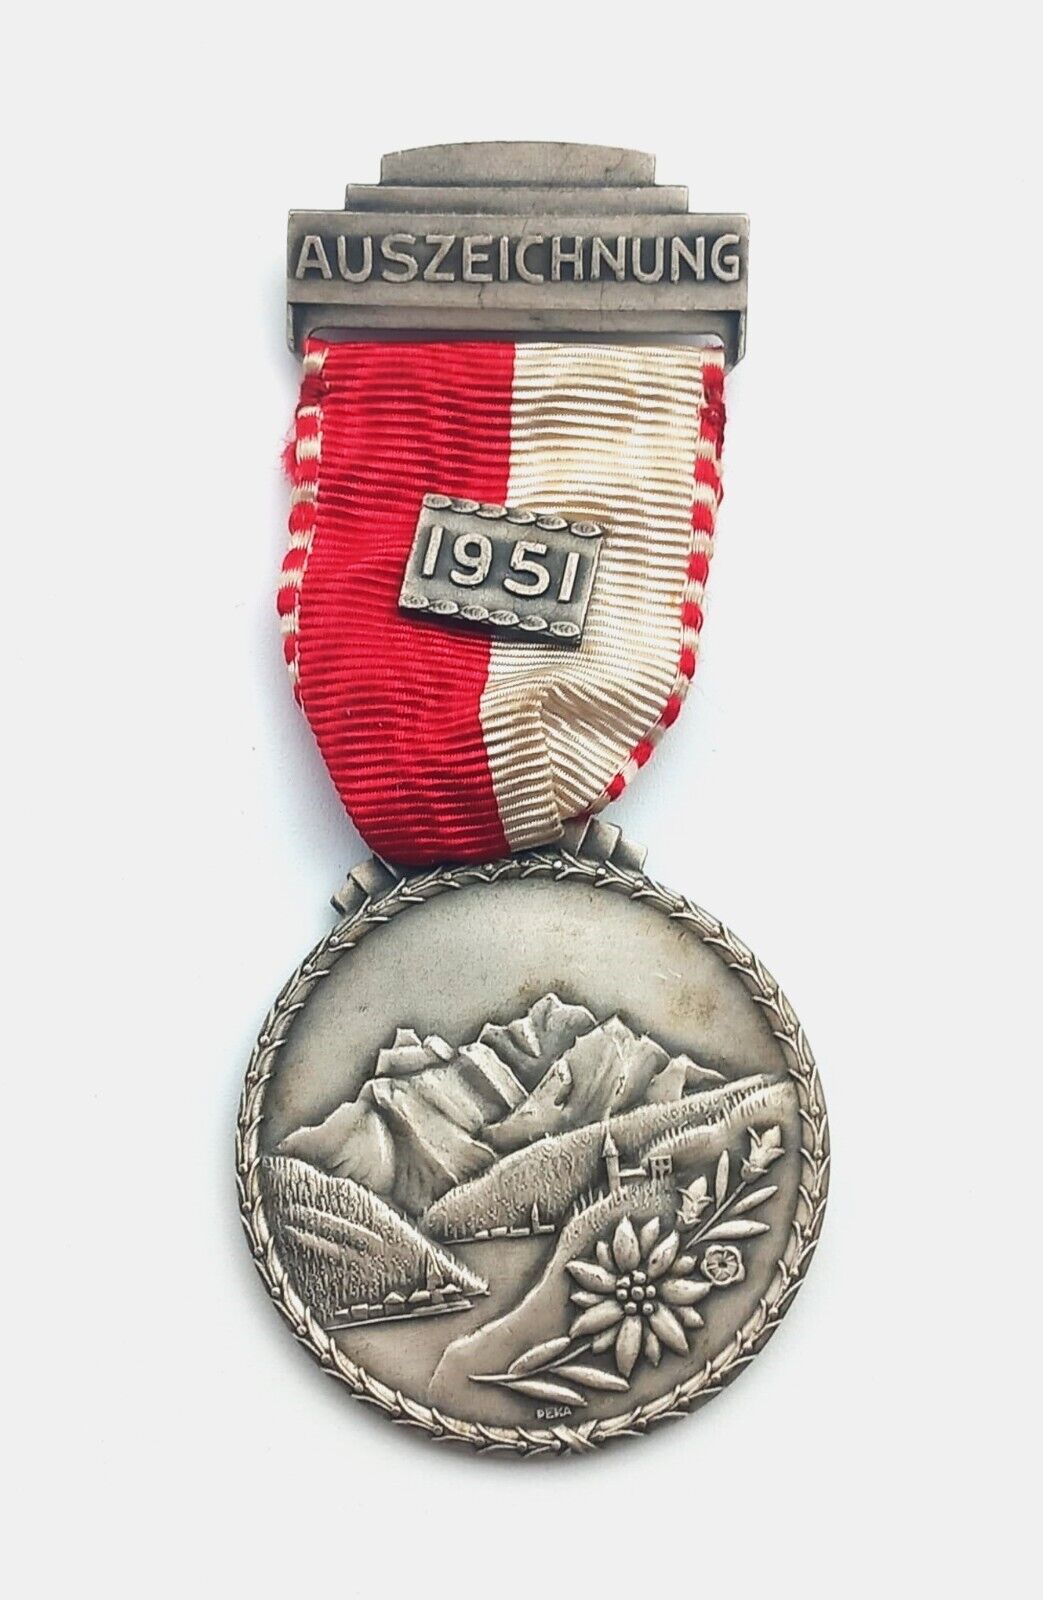 AUSZEICHNUNG 1951 swiss shotting ribon medal badge maker marked bimetal